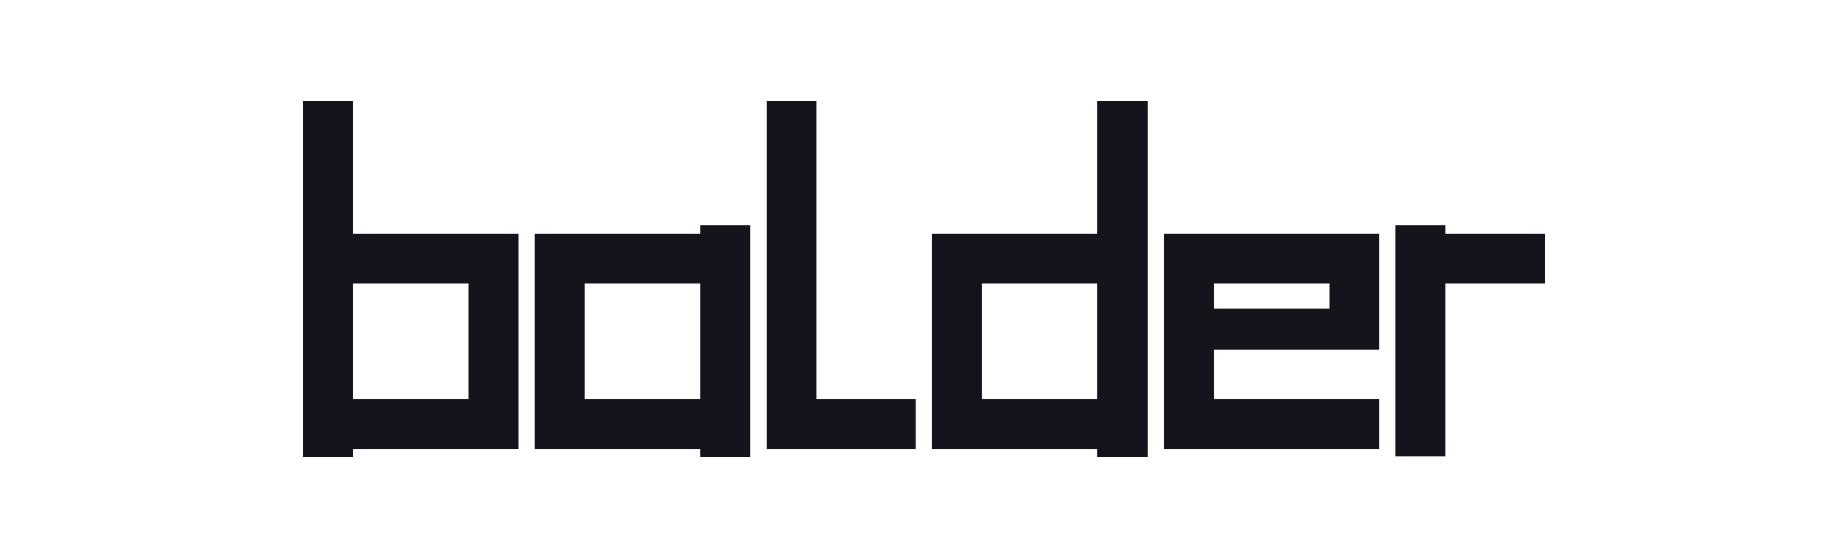 Balder logo